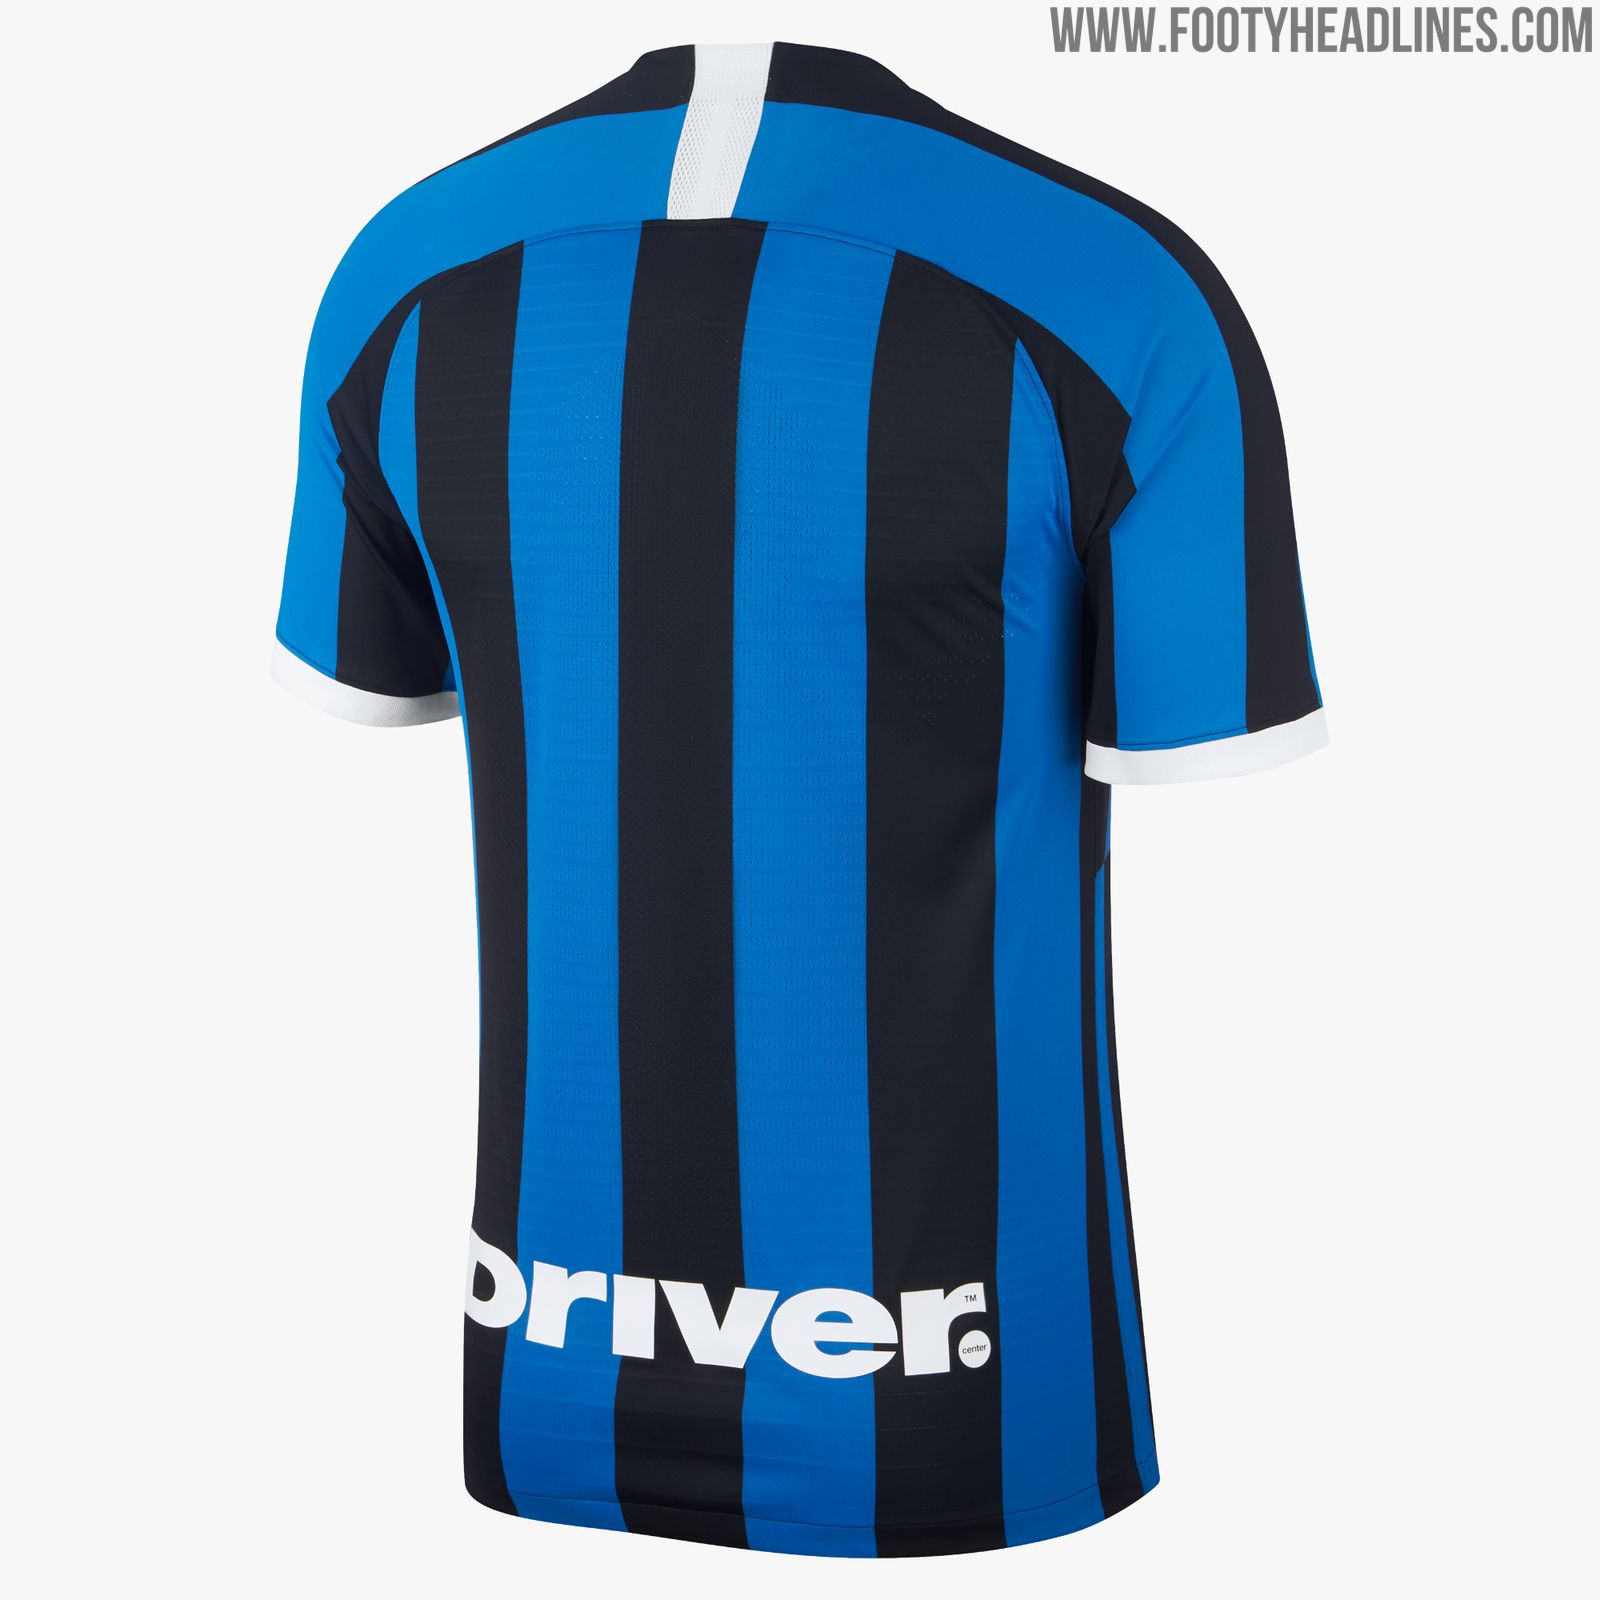 Inter Milan 19-20 Home Kit Revealed - Footy Headlines